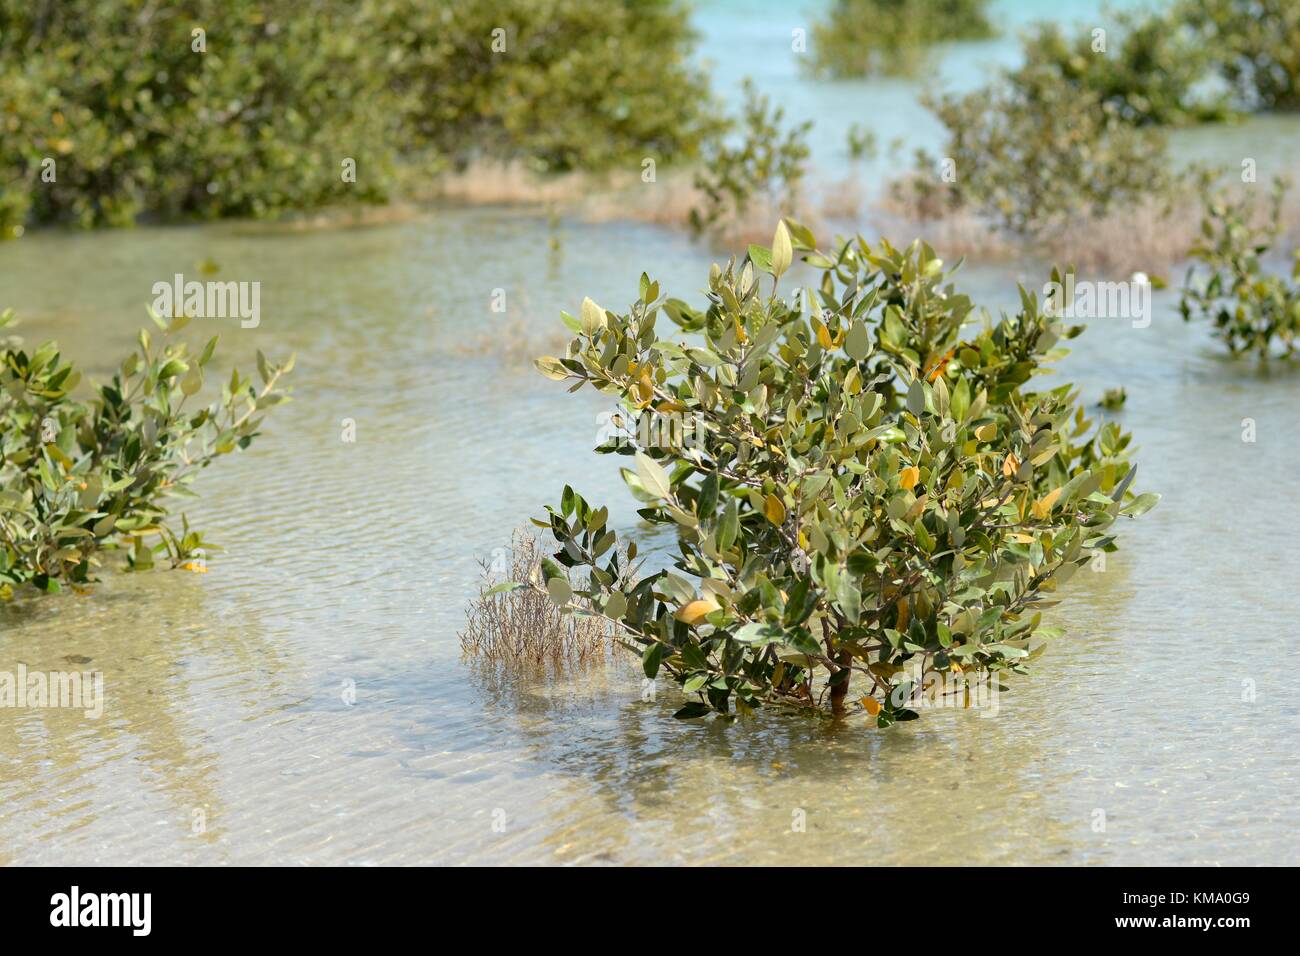 Grigio (mangrovie lat.: Avicennia marina) Foto Stock